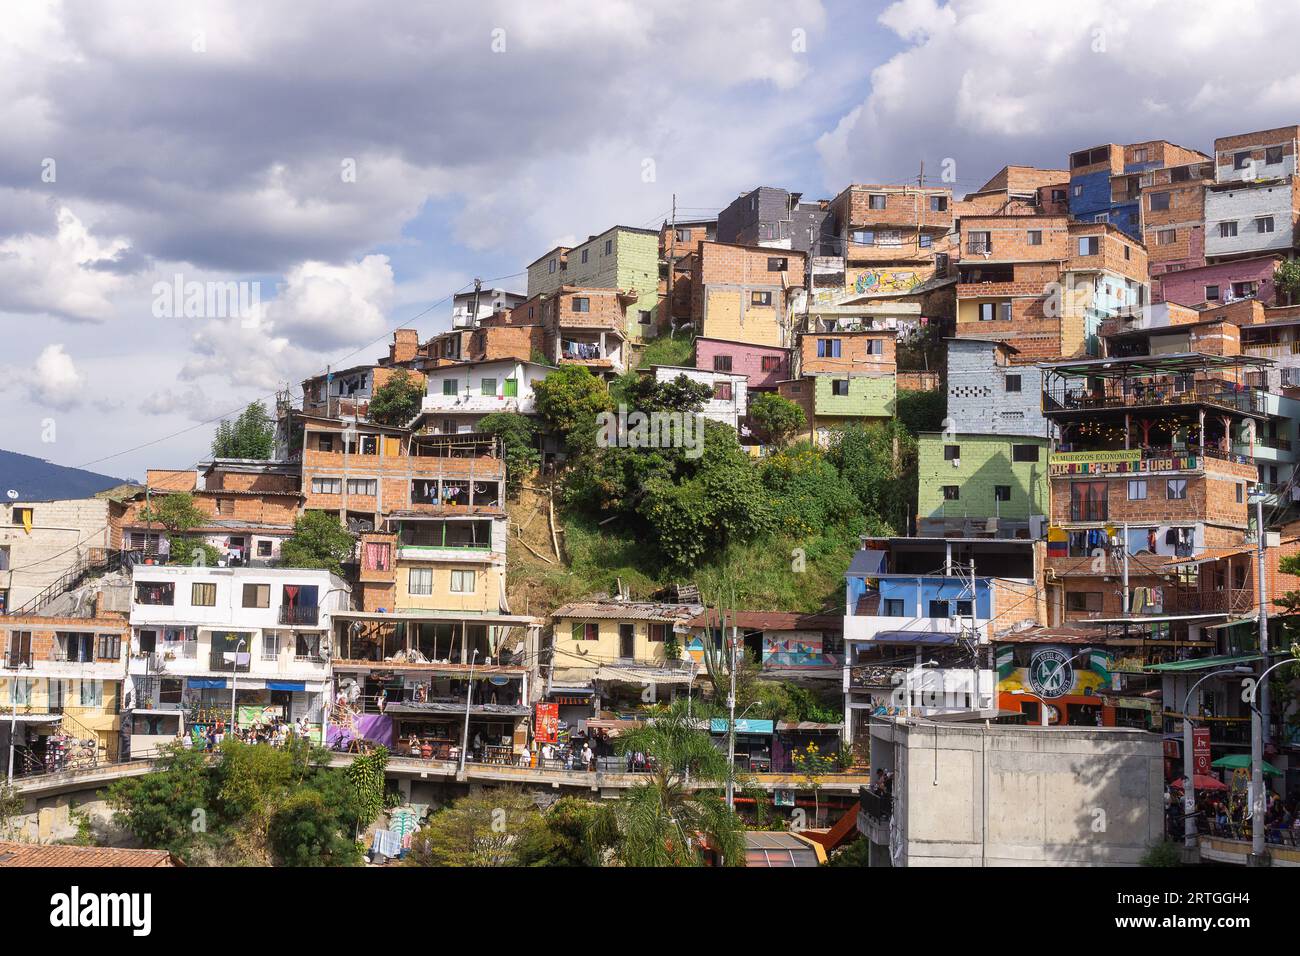 Houses in Comuna 13 (San Javier) neighbourhood of Medellin, Antioquia, Colombia Stock Photo